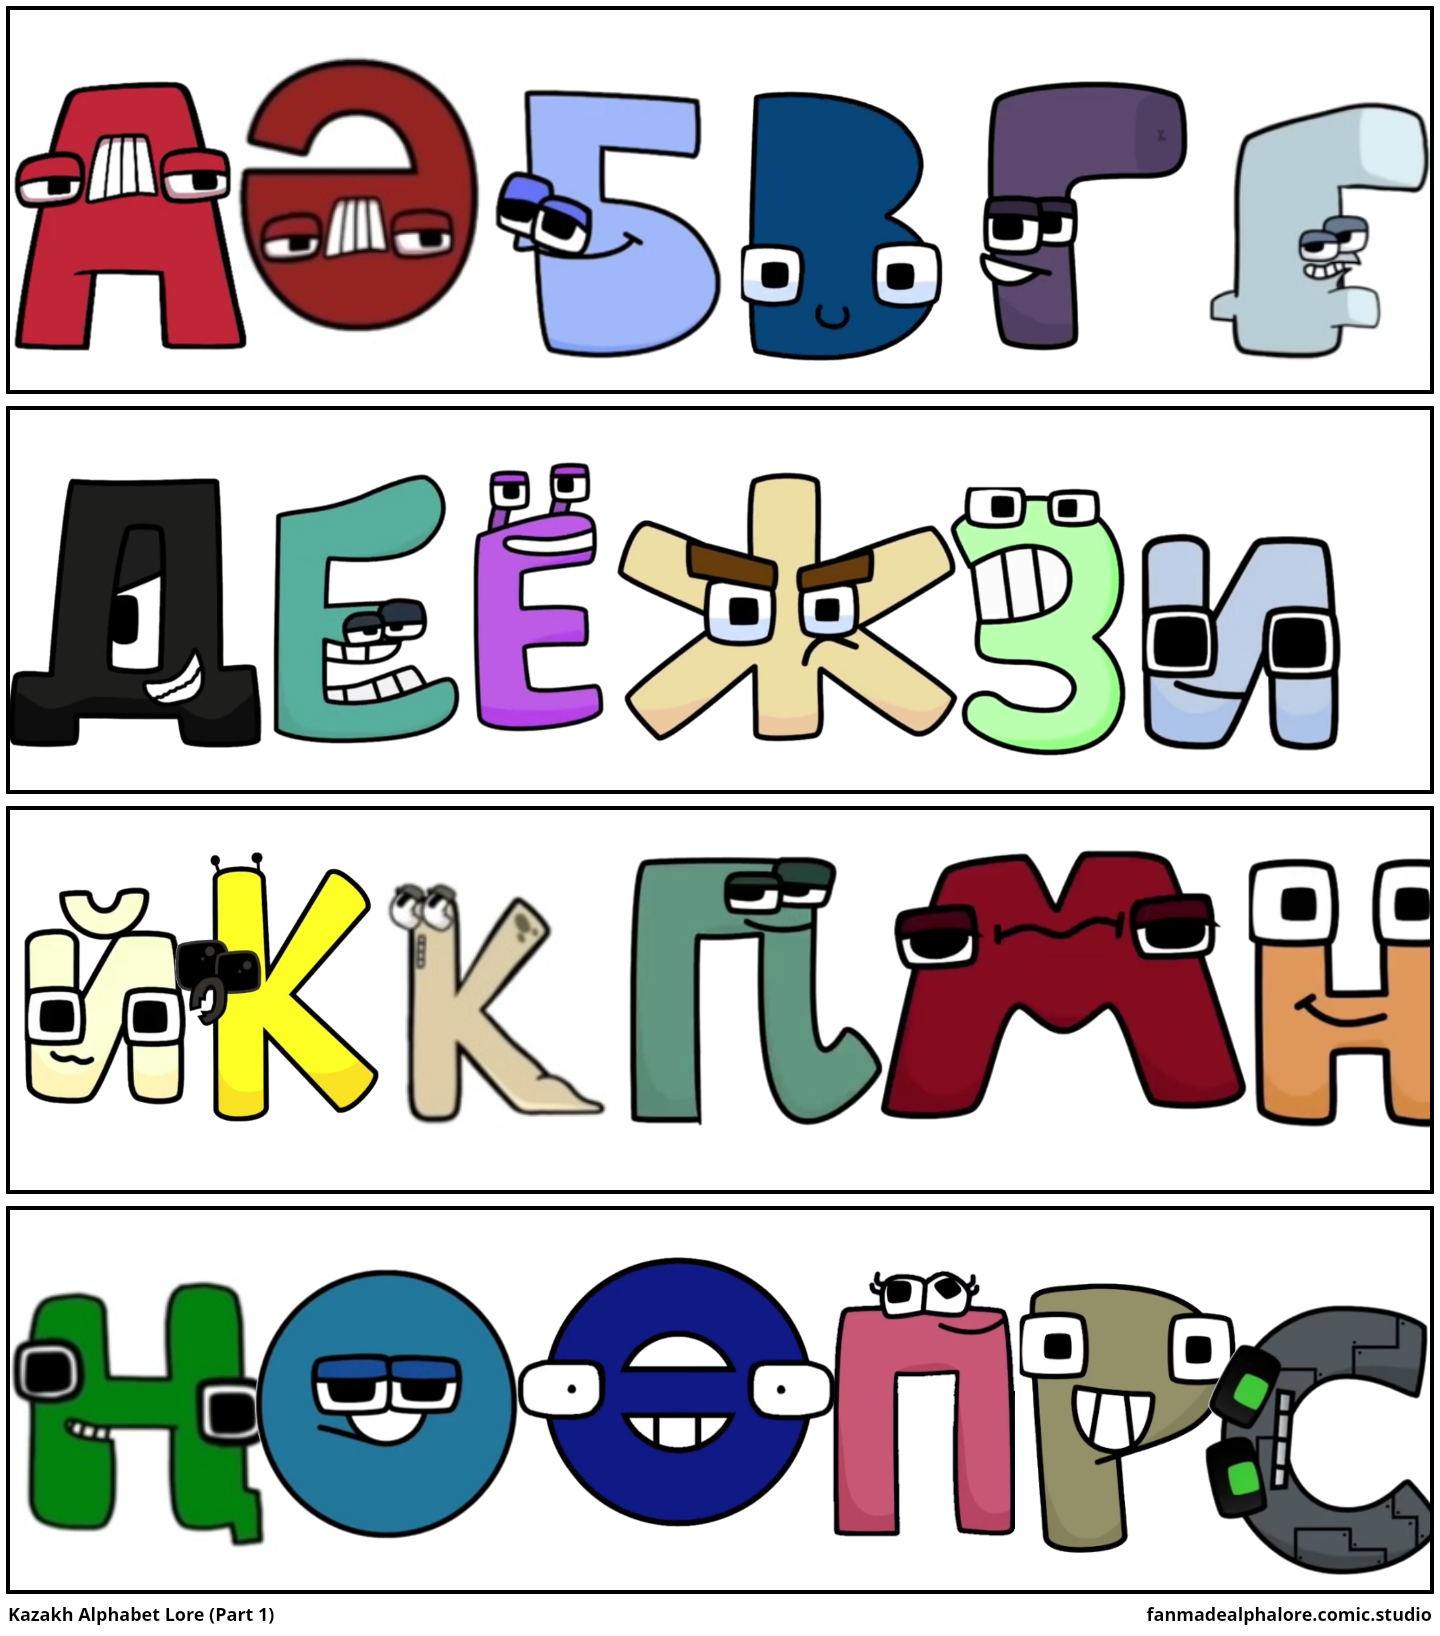 Kazakh Alphabet Lore (Part 1) - Comic Studio